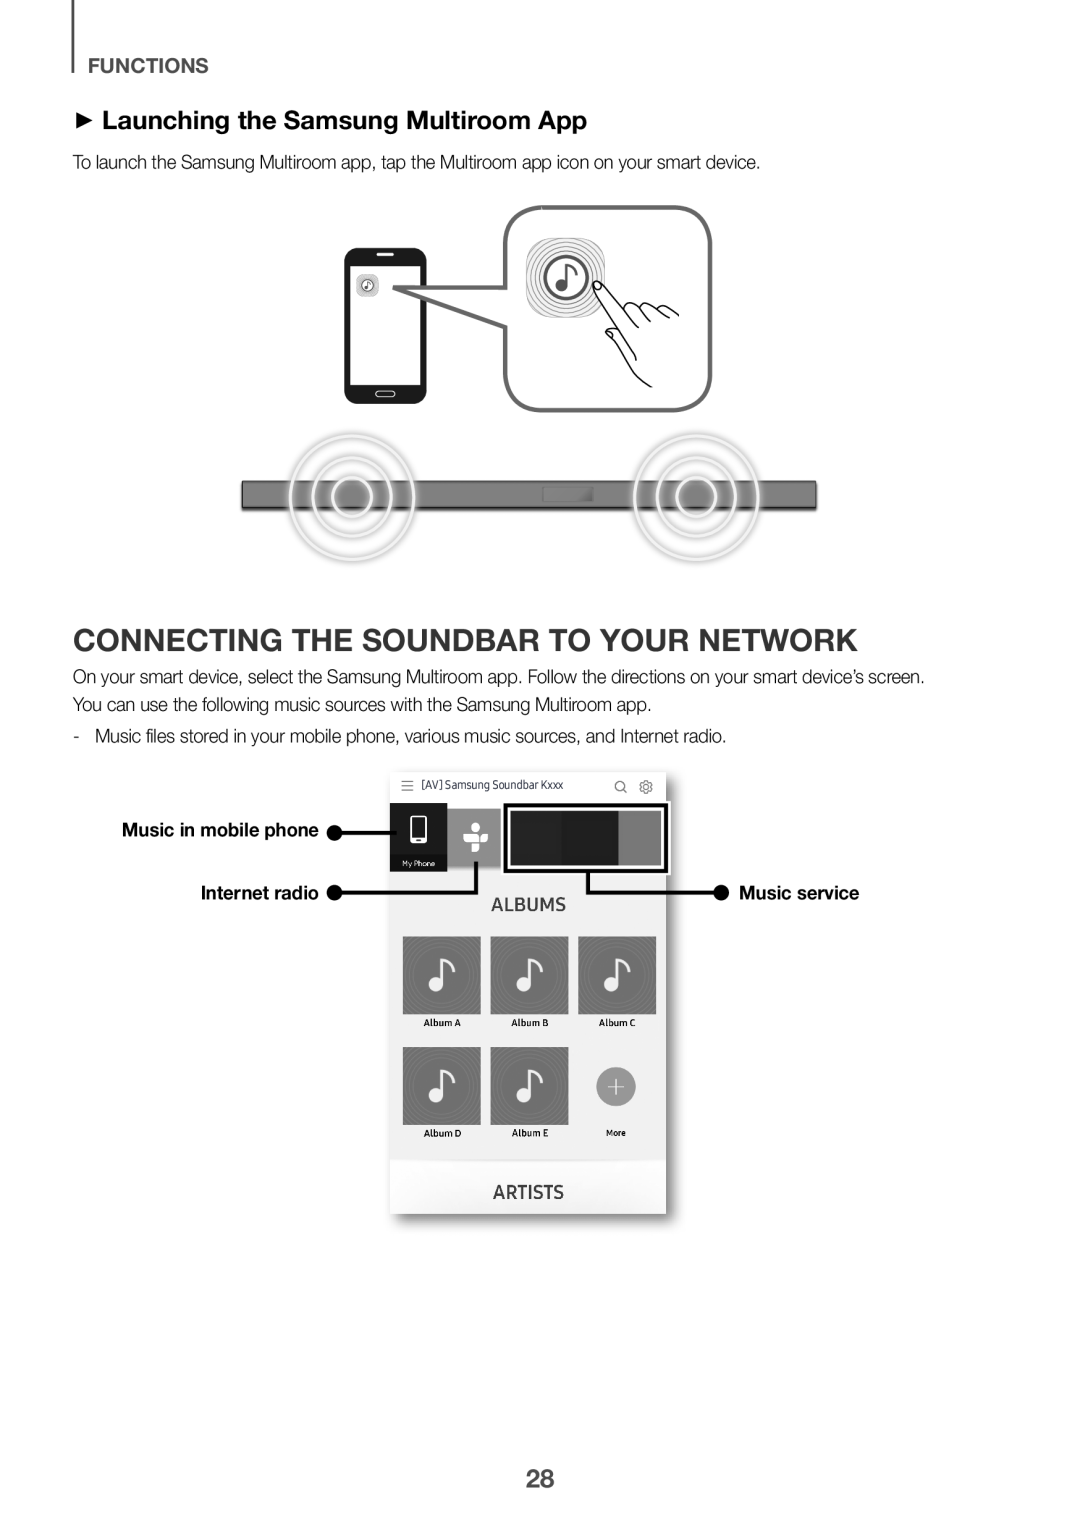 Samsung HW-K660/XE, HW-K651/EN Connecting the Soundbar to Your Network, ++Launching the Samsung Multiroom App, Functions 